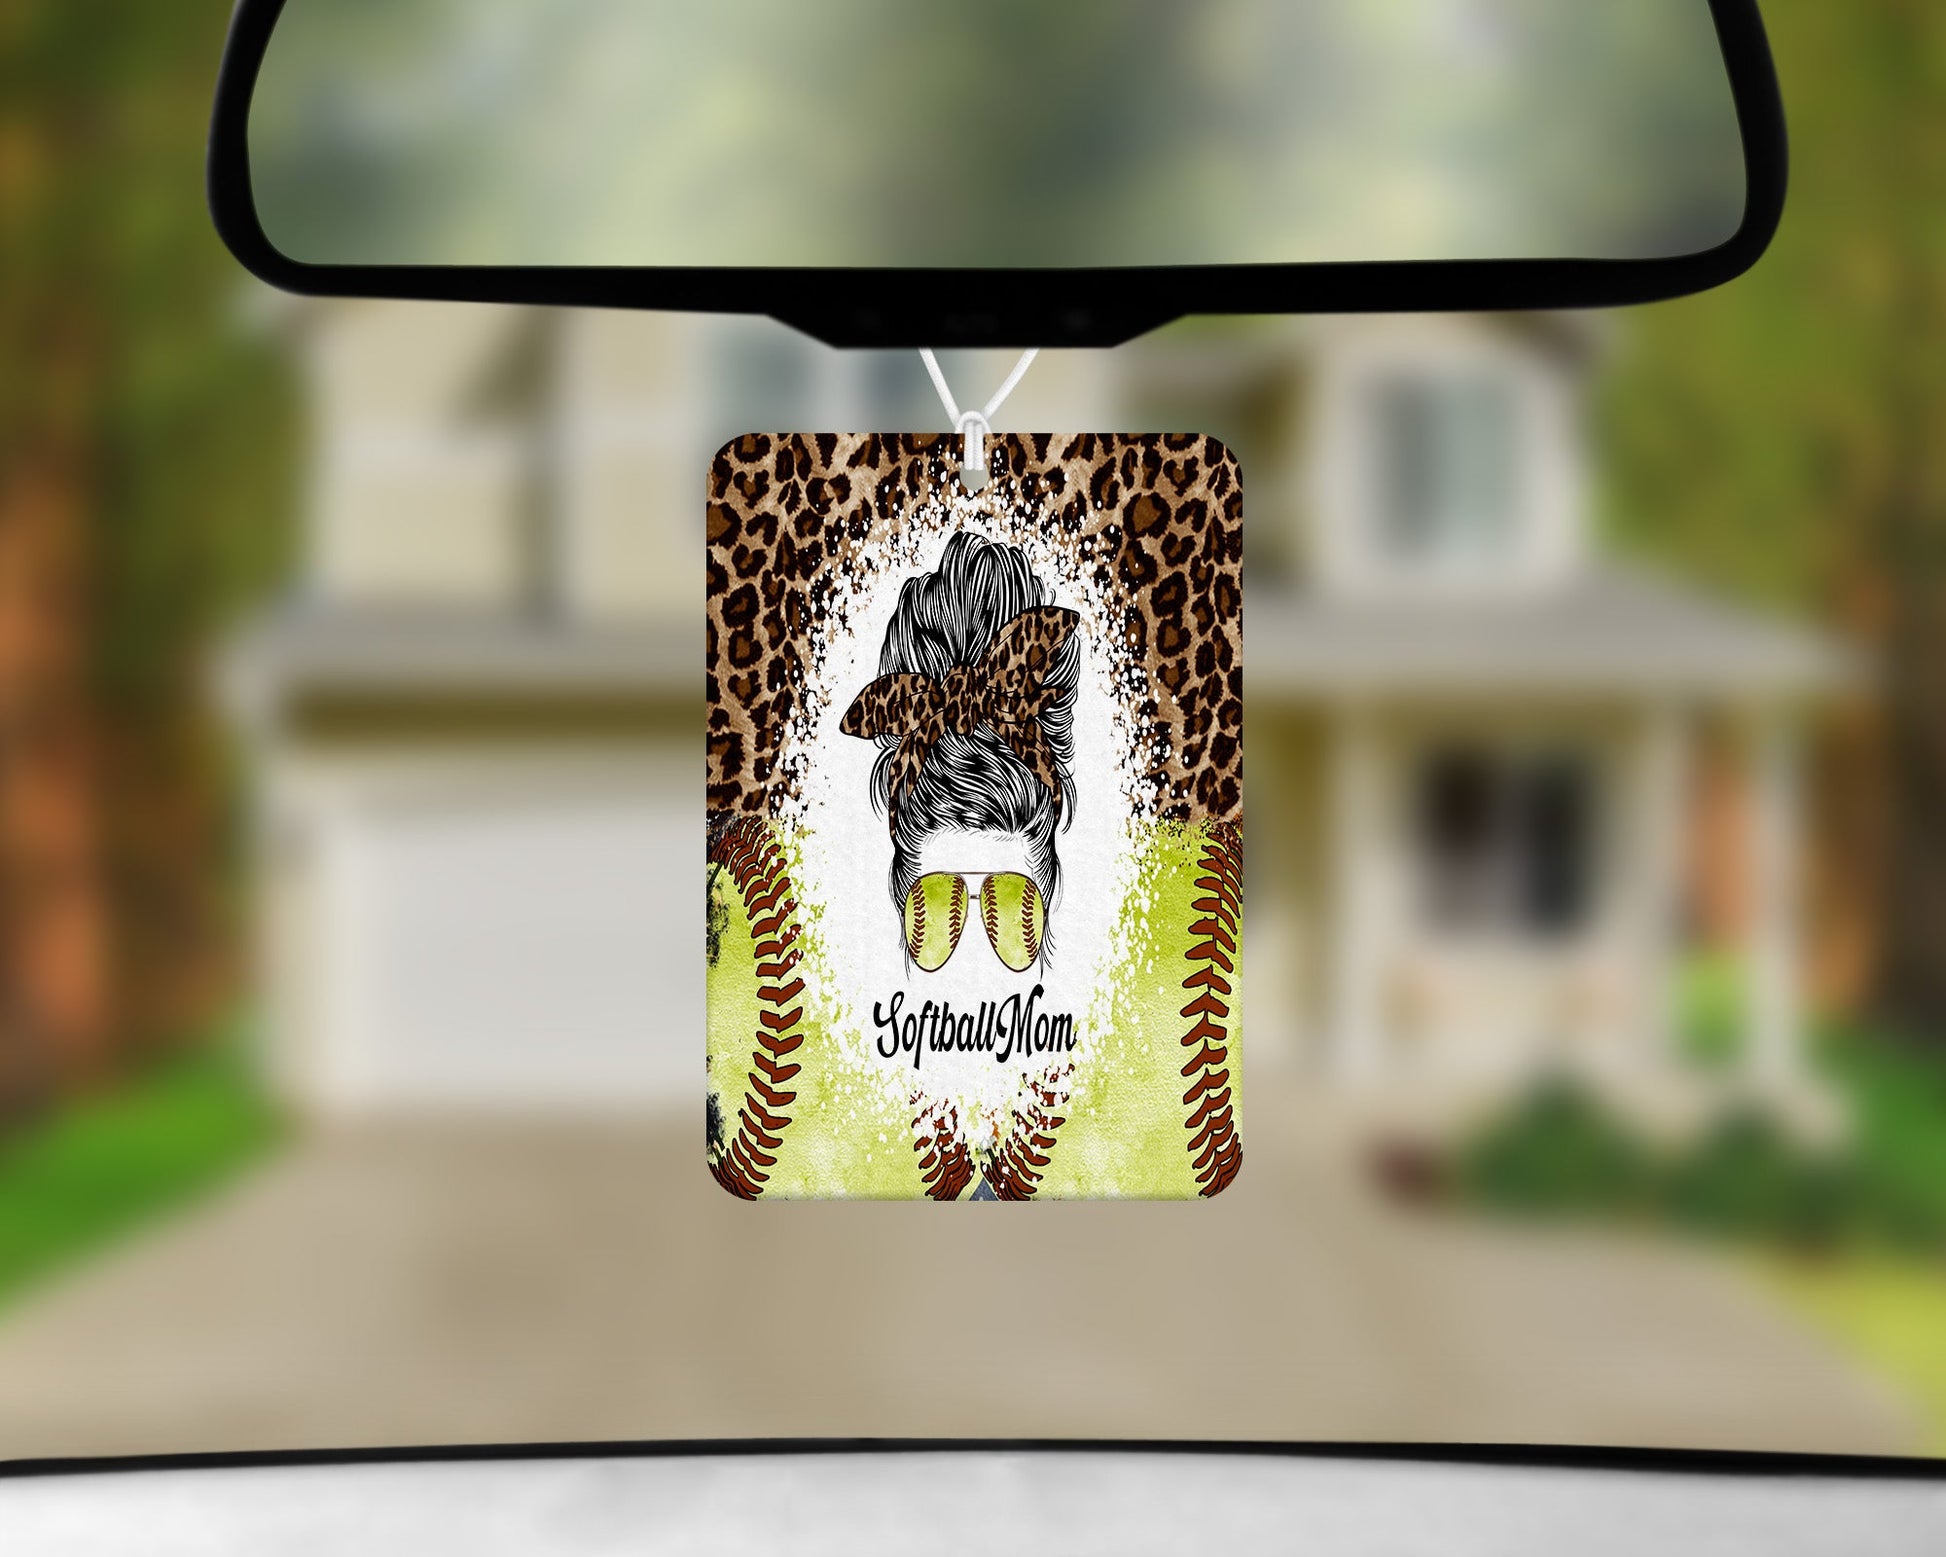 Softball Mom Leopard Print|Freshie|Includes Scent Bottle - Vehicle Air Freshener